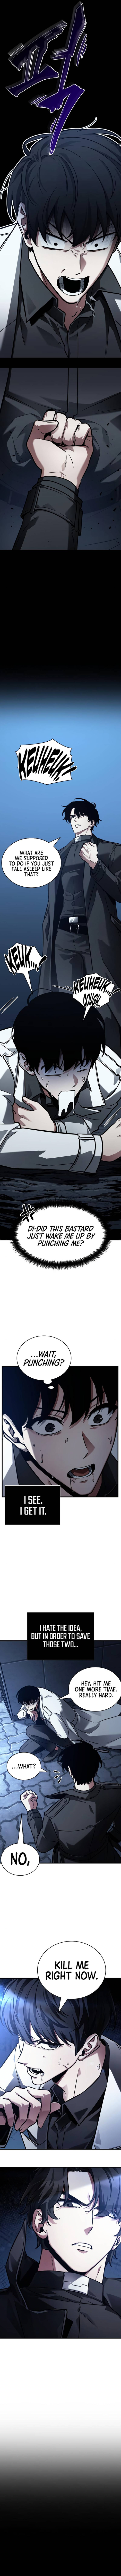 Omniscient Reader's View Manga Manga Chapter - 153 - image 6